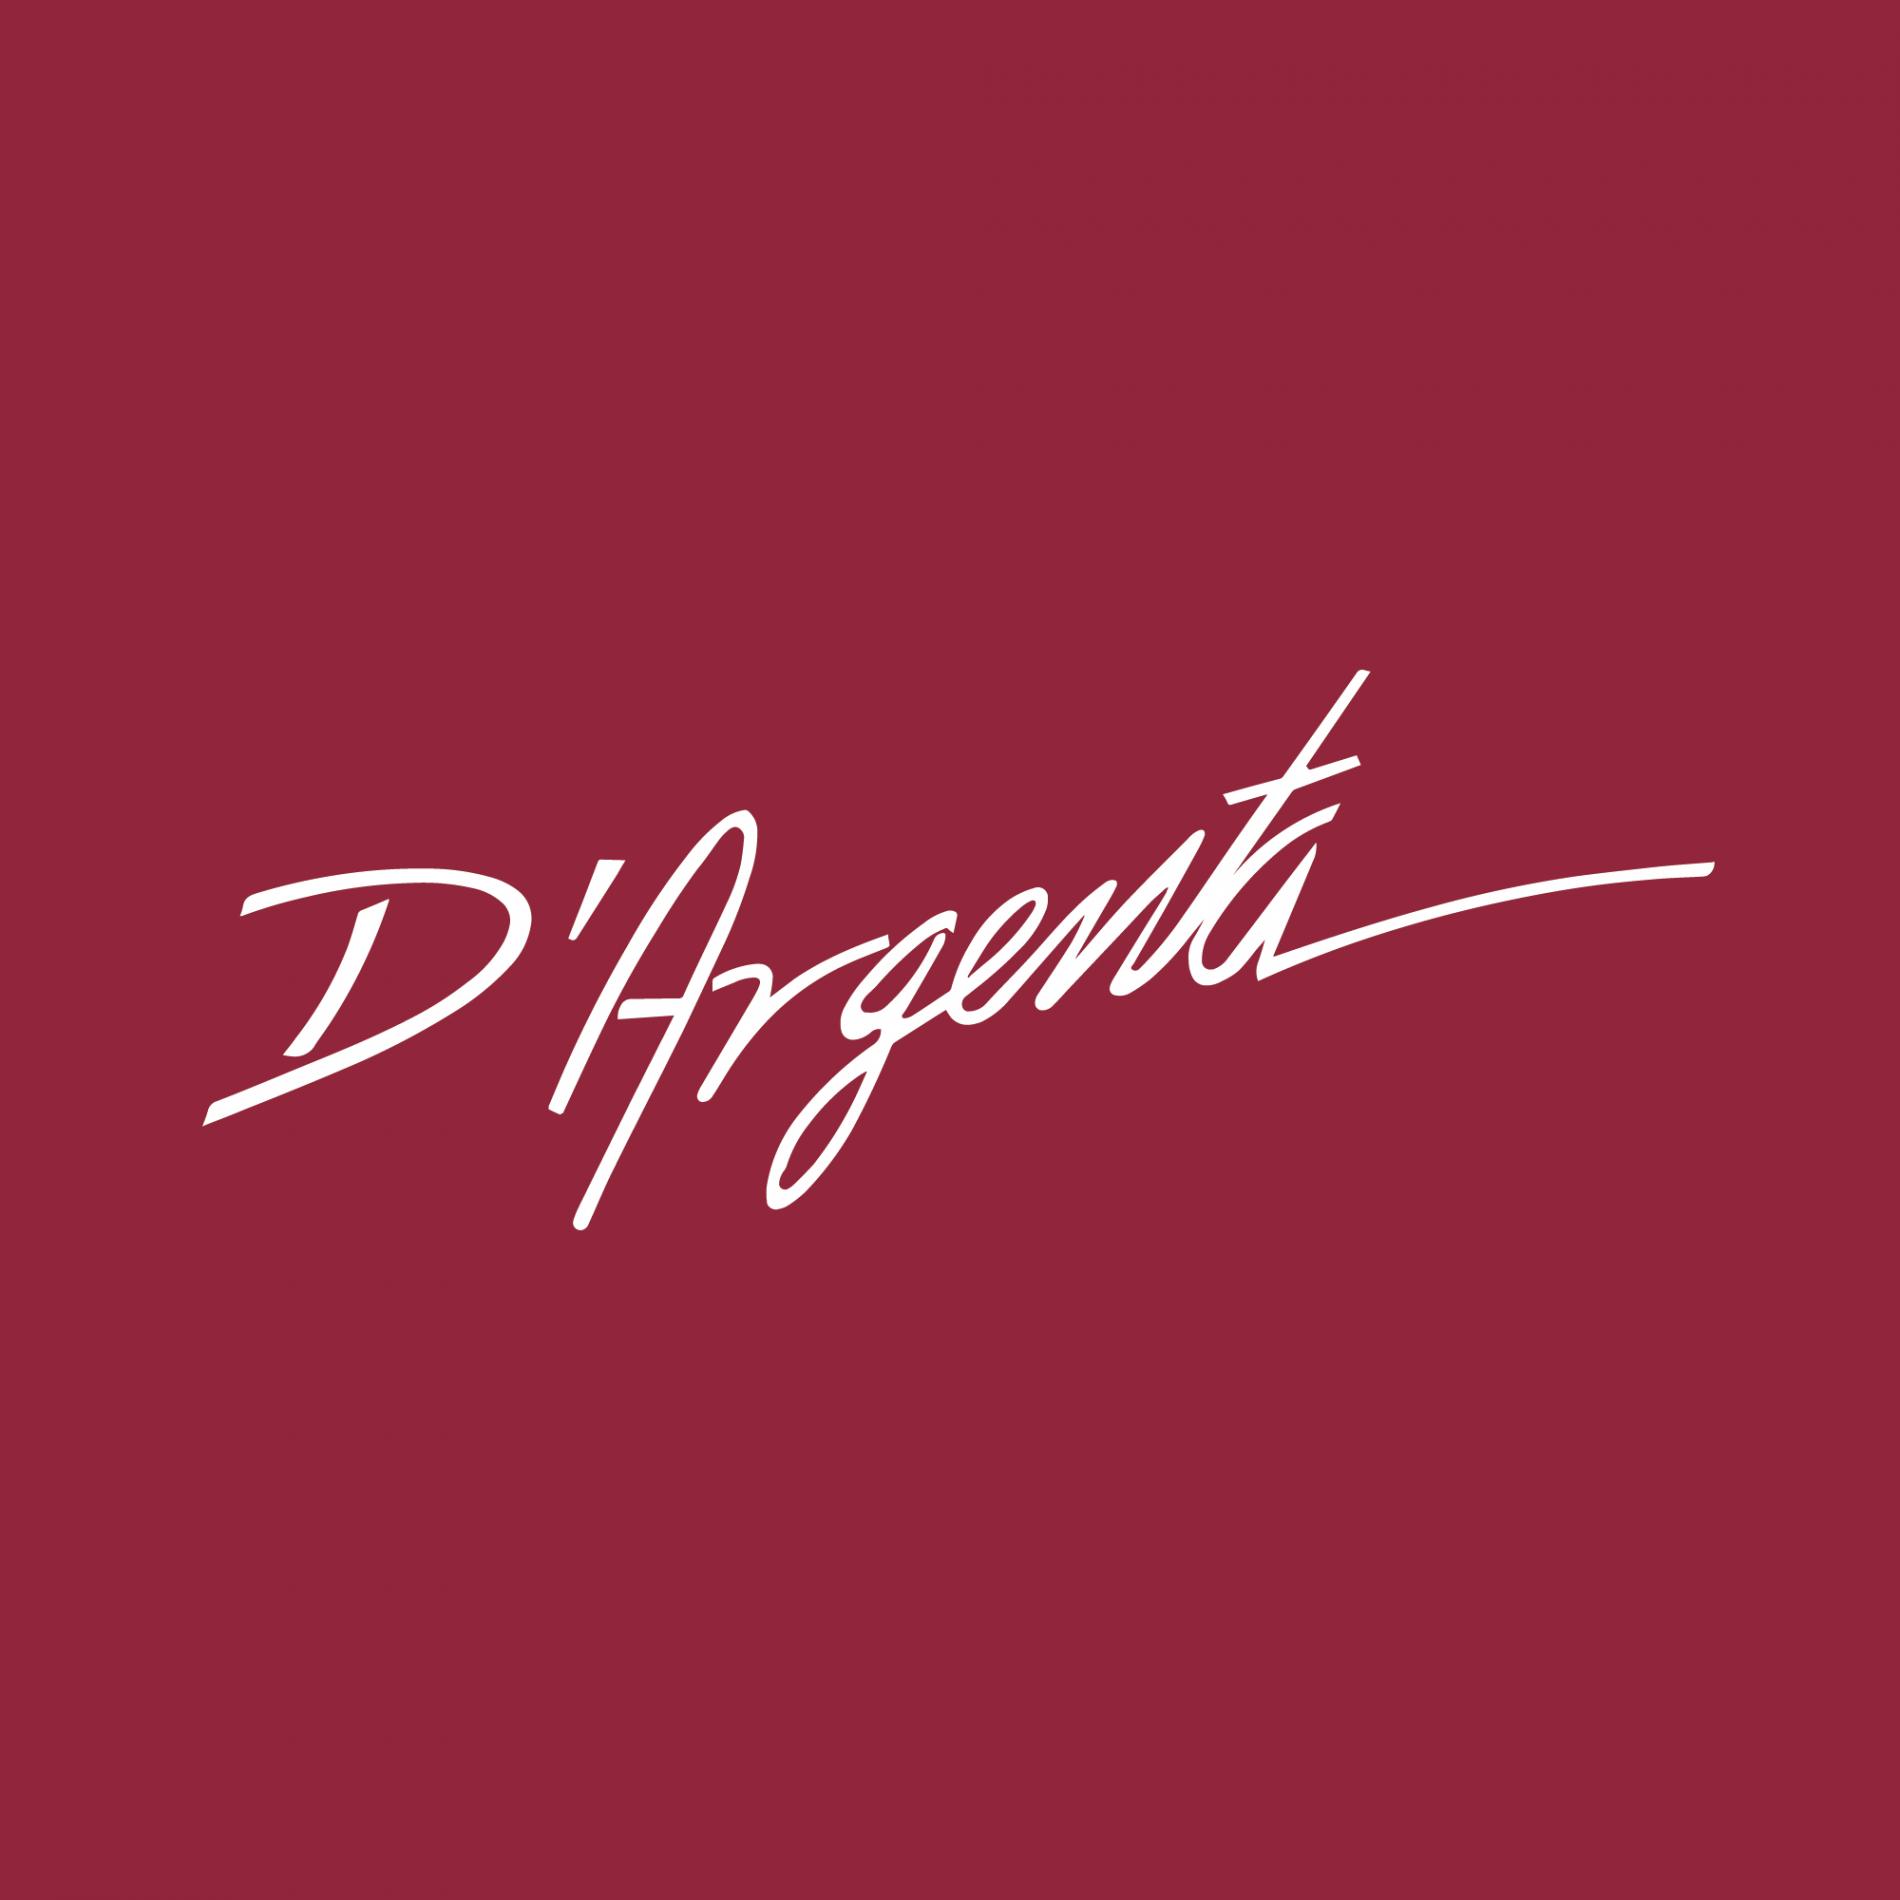 dargentaofficial Logo